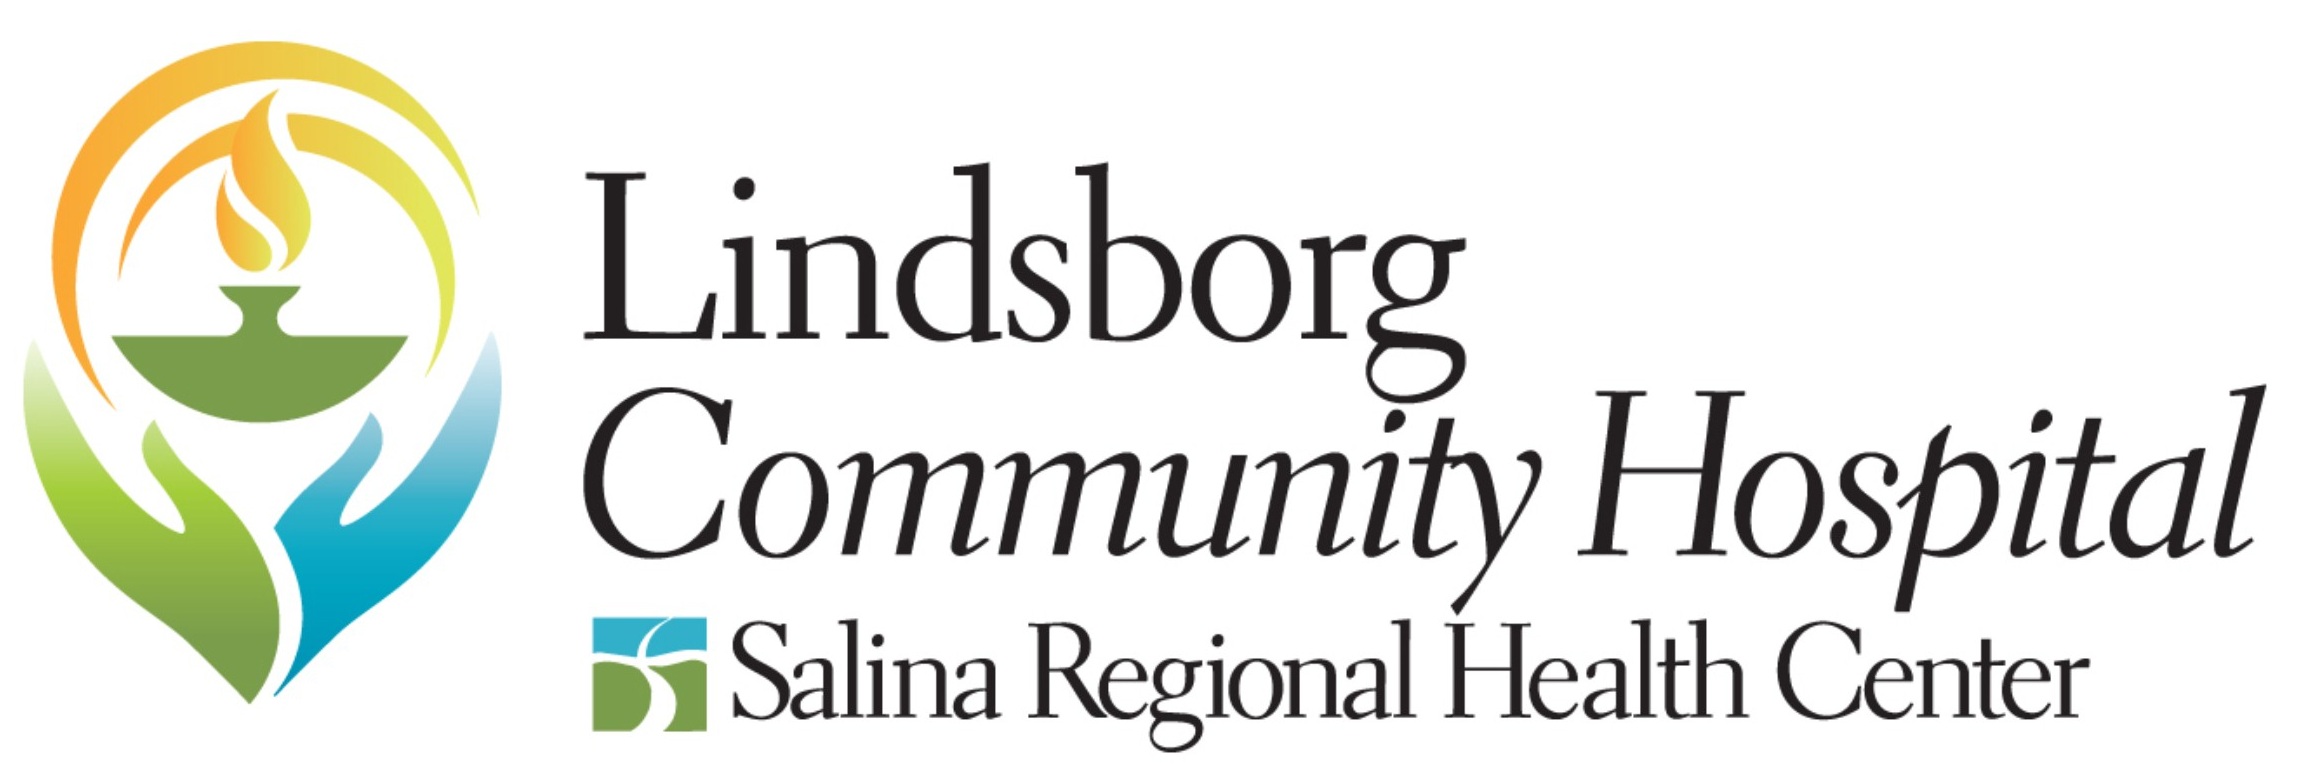 Lindsborg Community Hospital